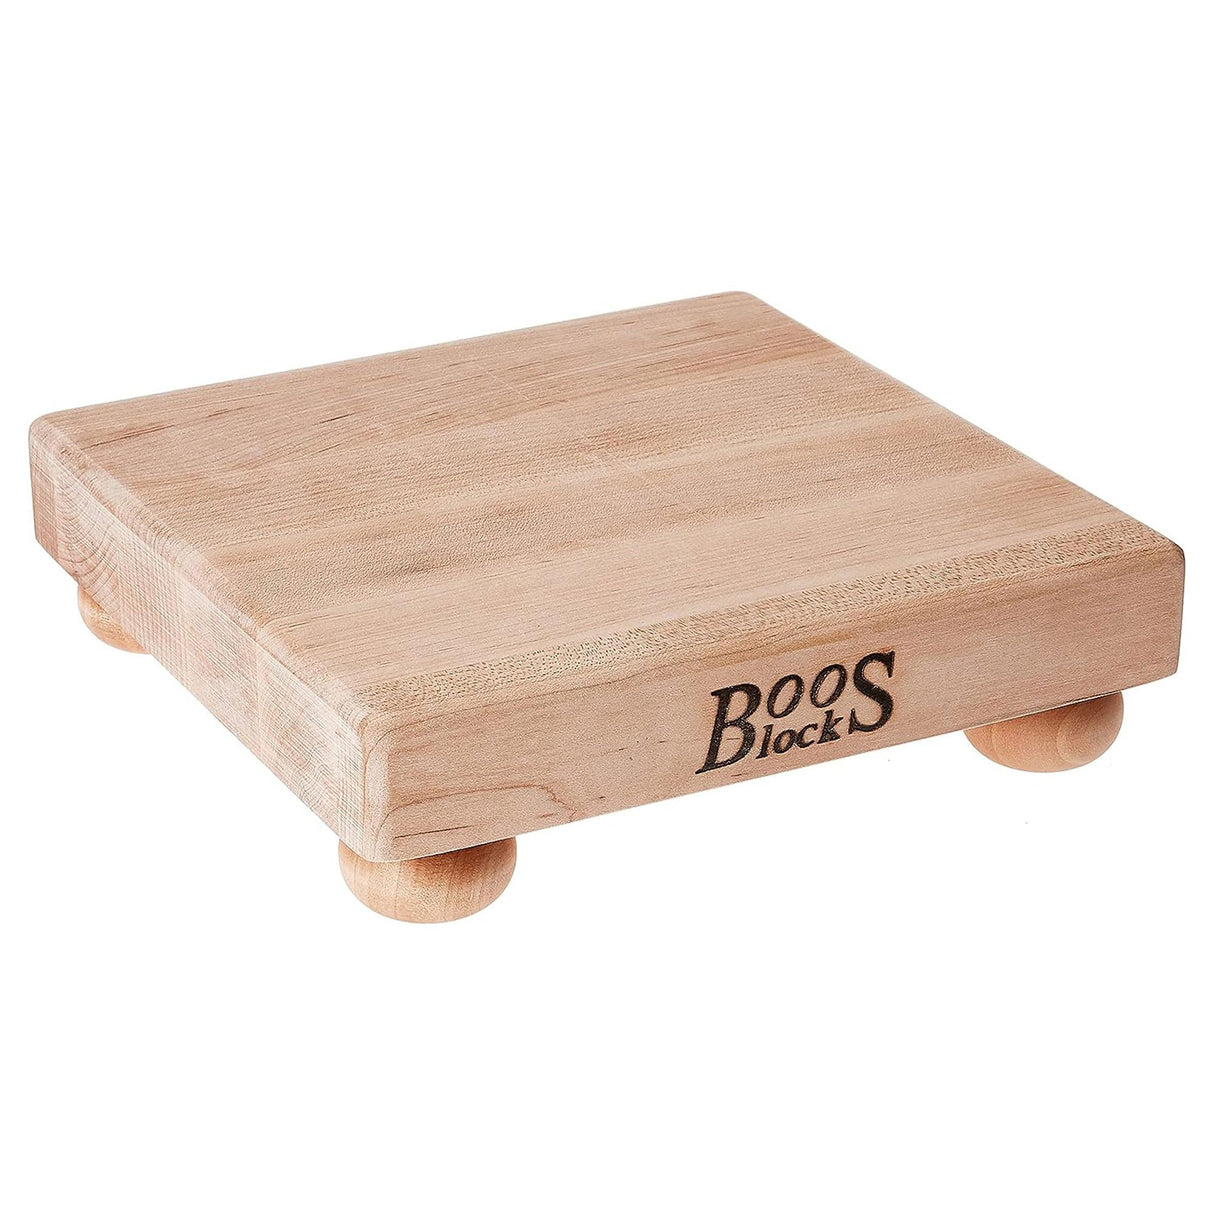 John Boos B9S Small Maple Cutting Board for Kitchen Prep 9 x Inches, 1.5 Inches Thick Edge Grain Square Charcuterie Block with Wooden Bun Feet 09X09X1.5 MPL-EDGE GR-MPL BUN FT